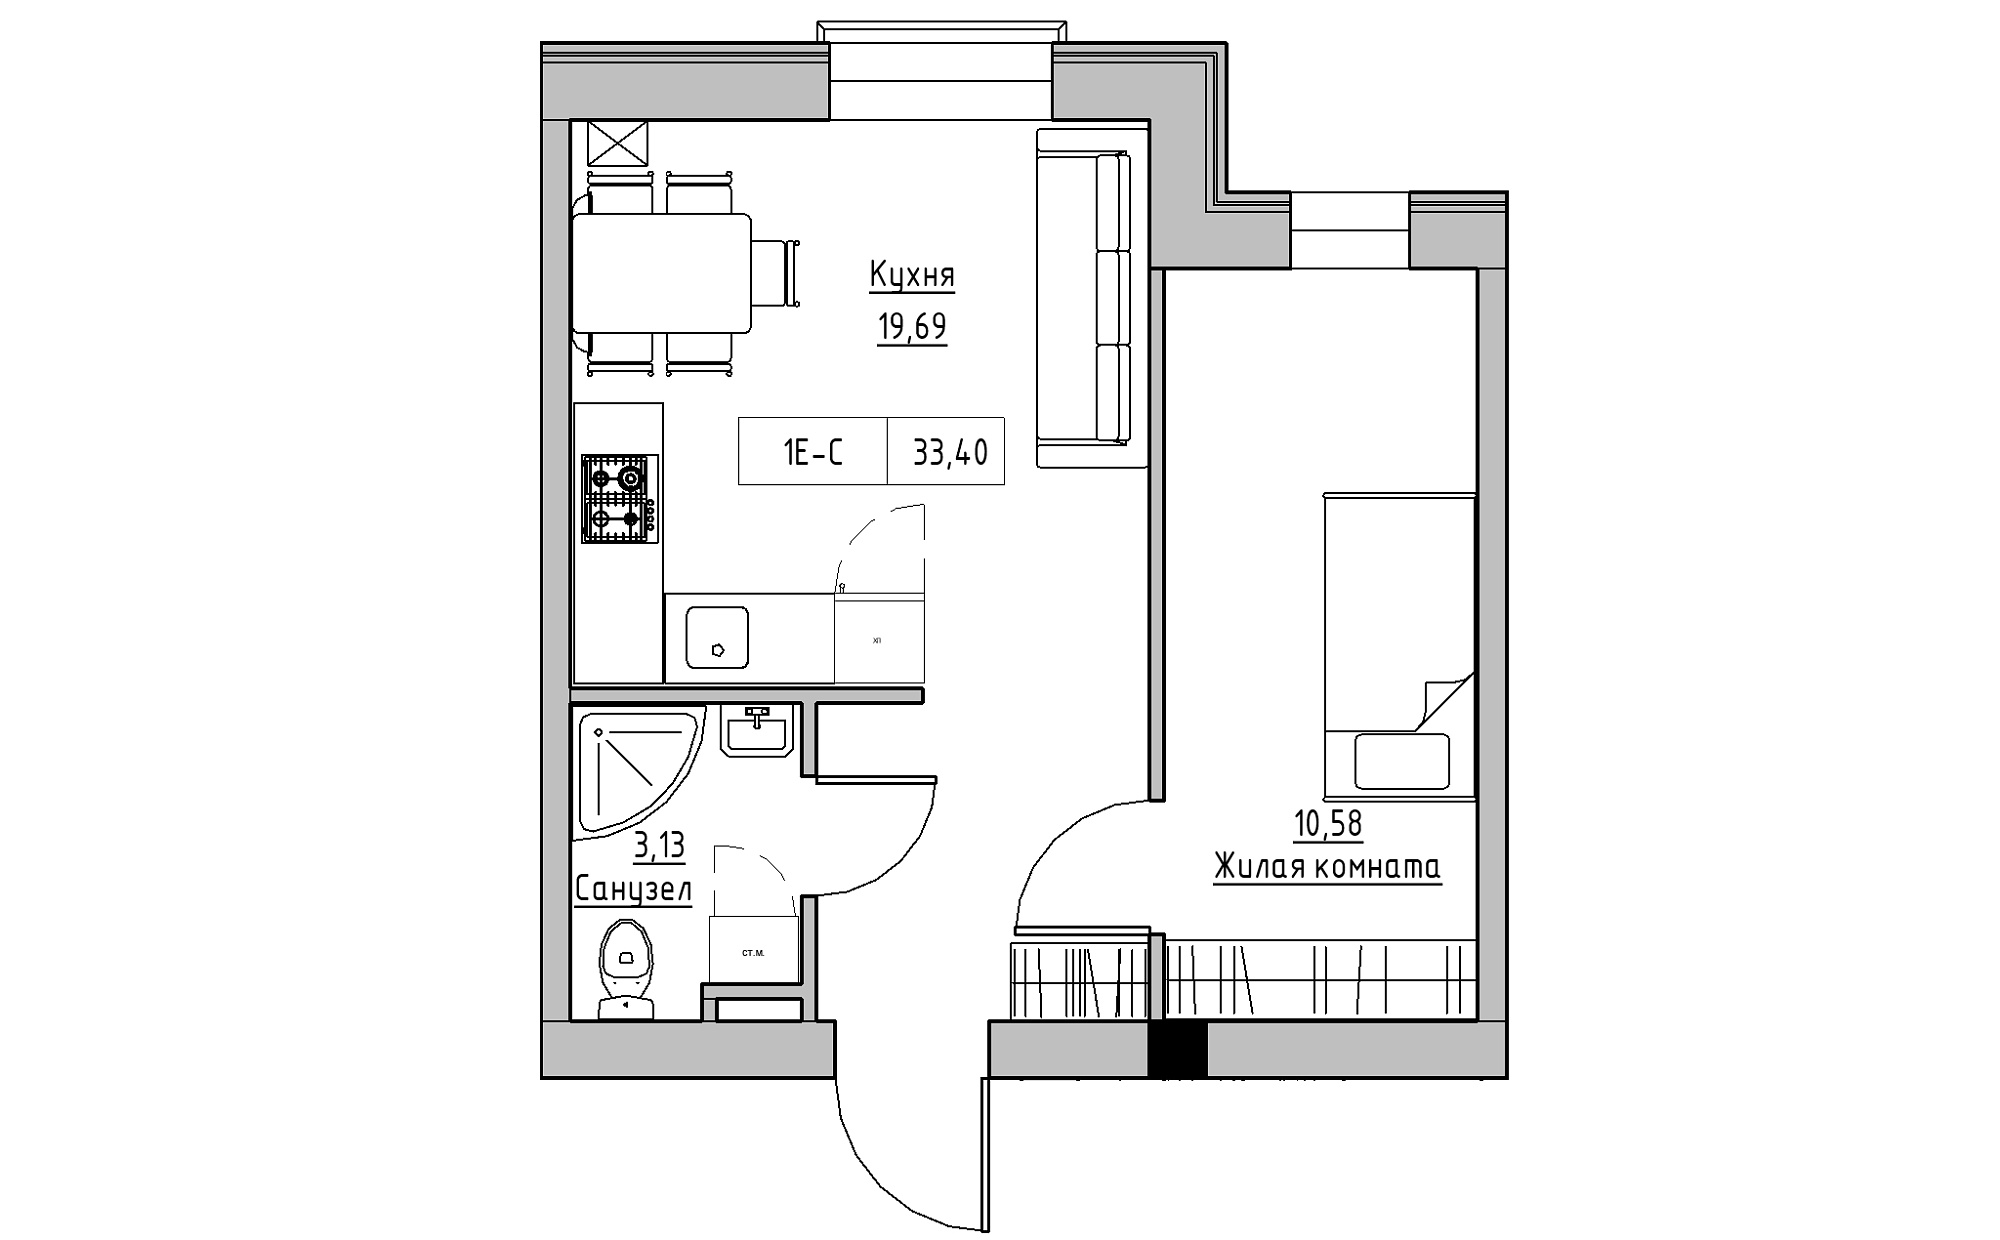 Planning 1-rm flats area 33.4m2, KS-022-01/0008.